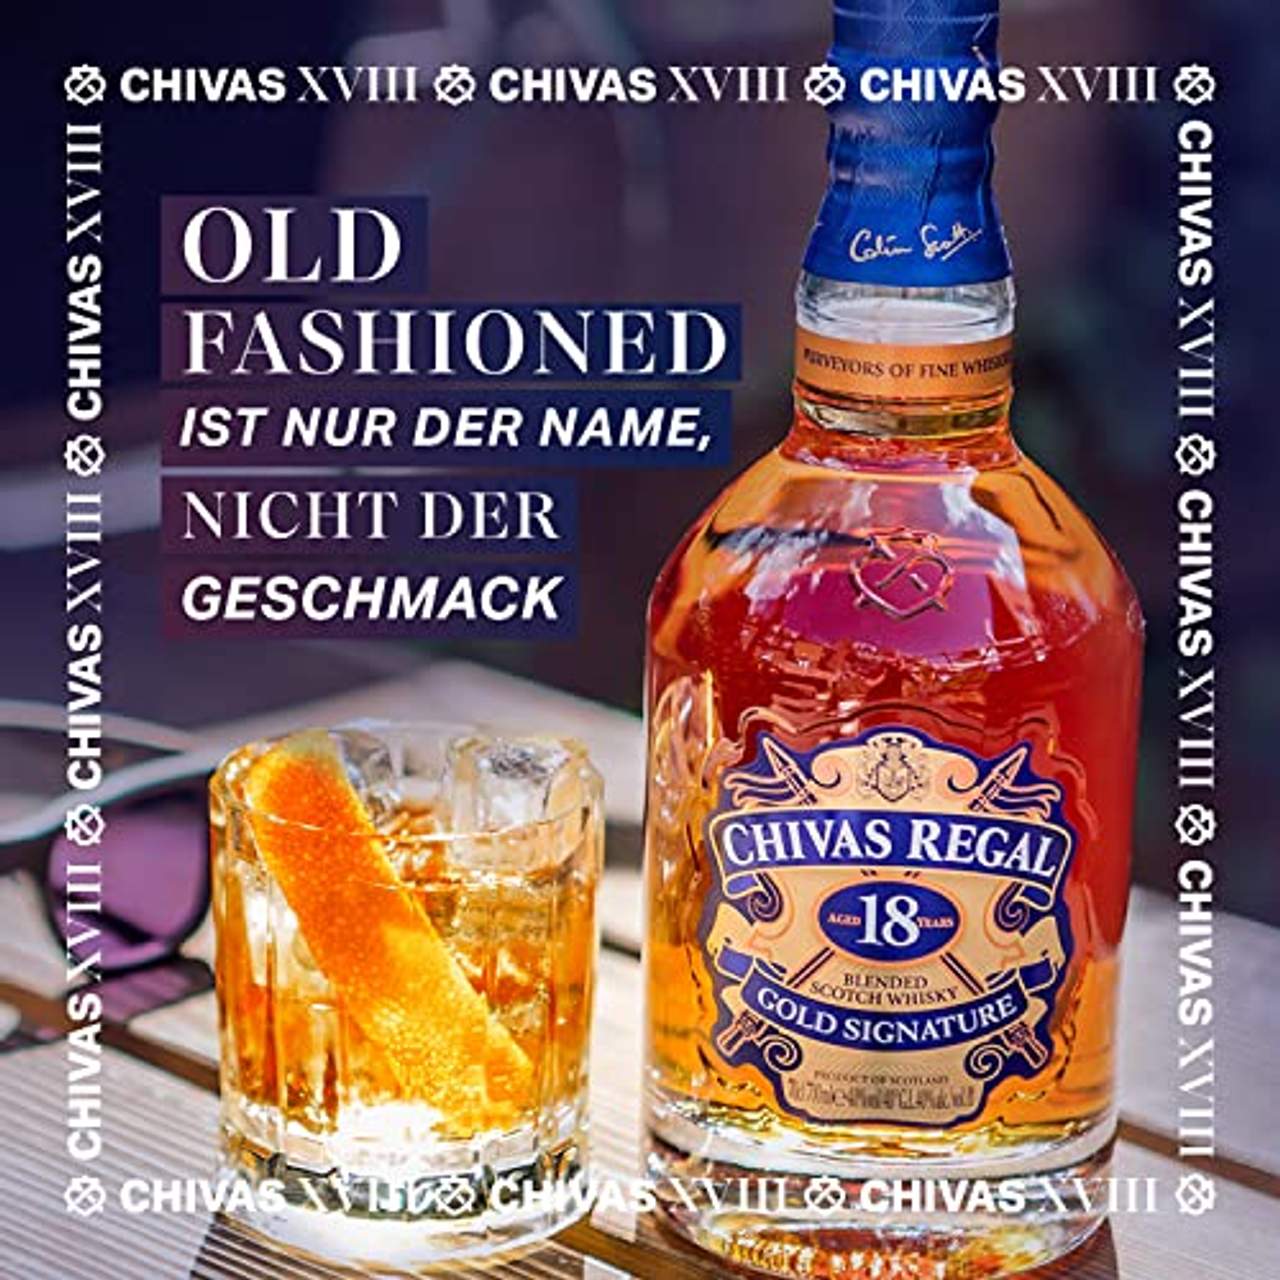 Chivas Regal 18 Jahre Gold Signature Blended Scotch Whisky